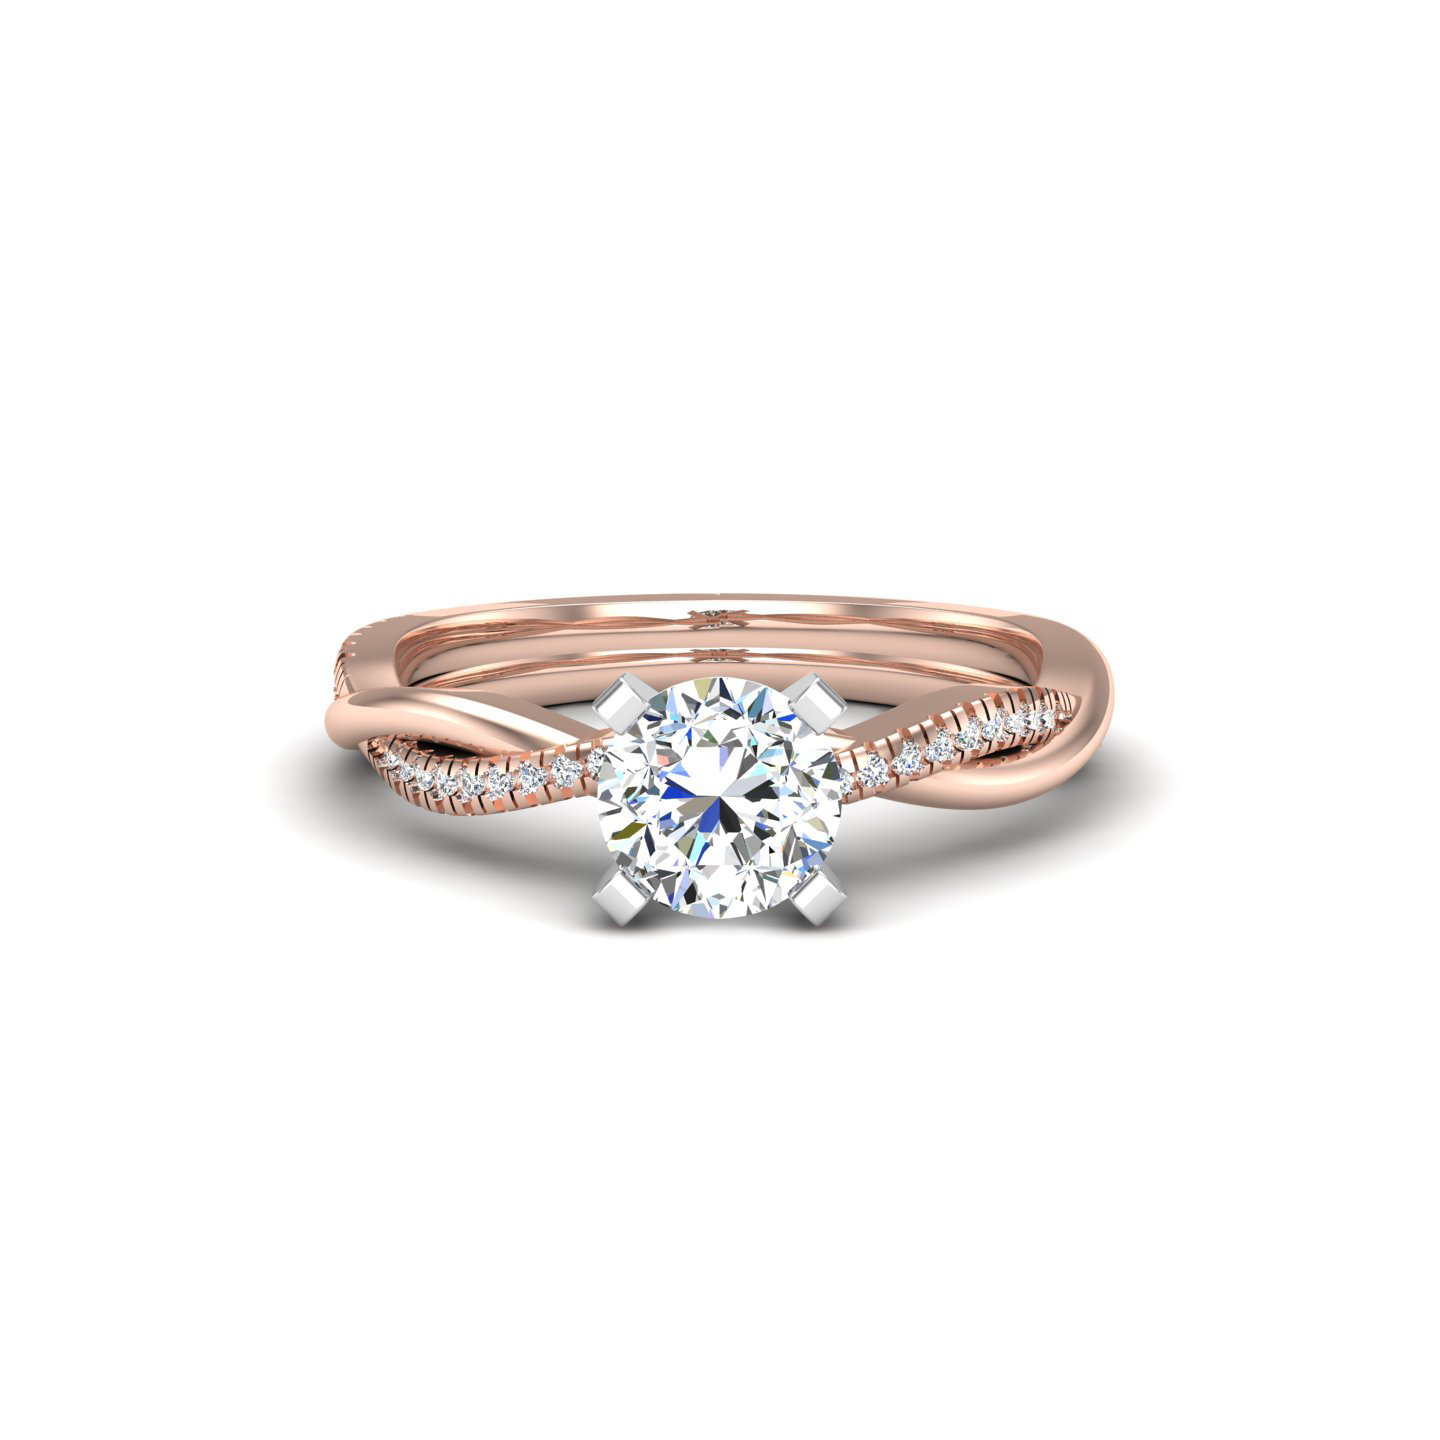 Sophia Diamond Engagement Ring (2.5 Carat) -14k White Gold